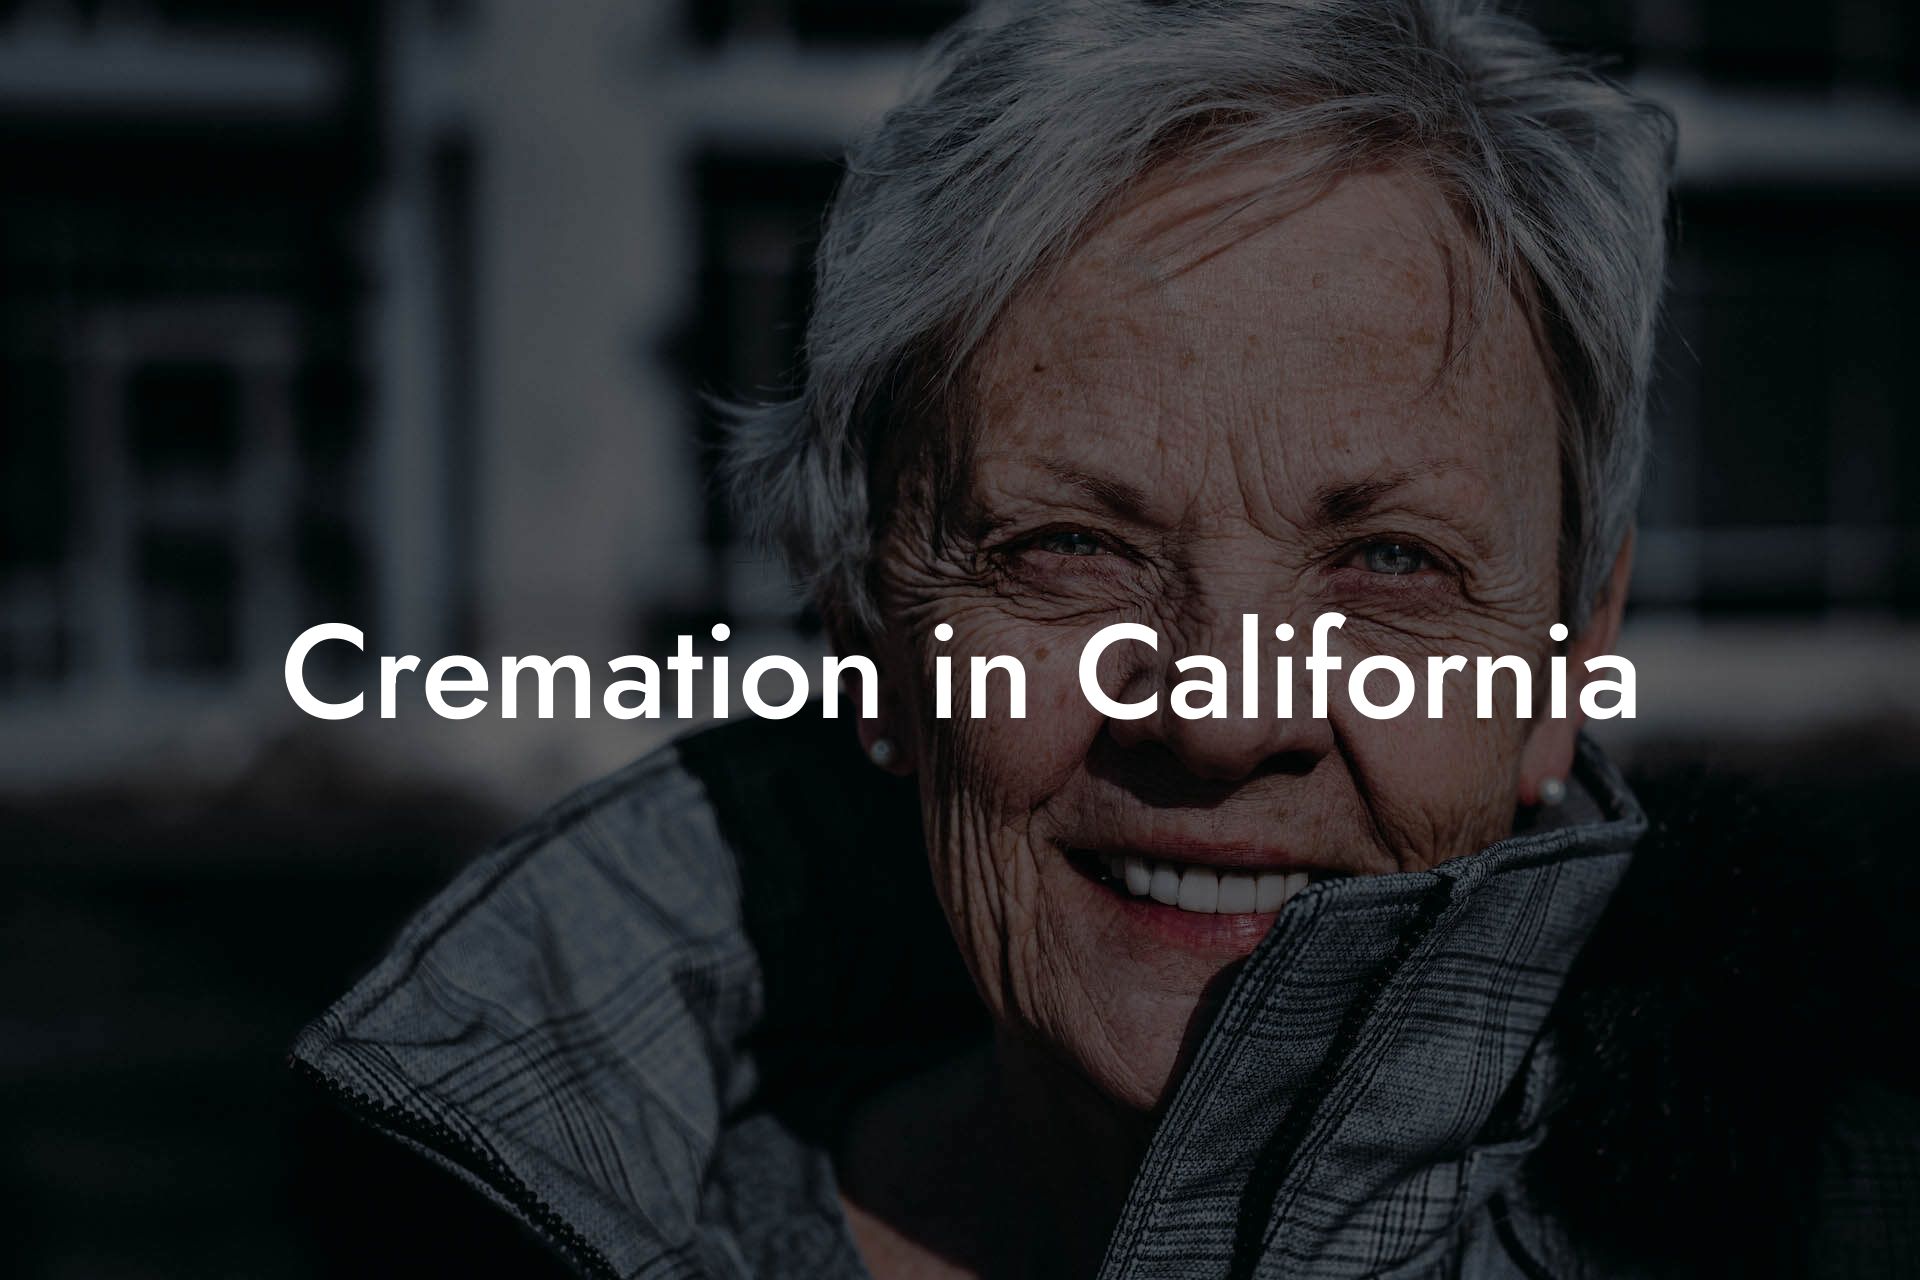 Cremation in California